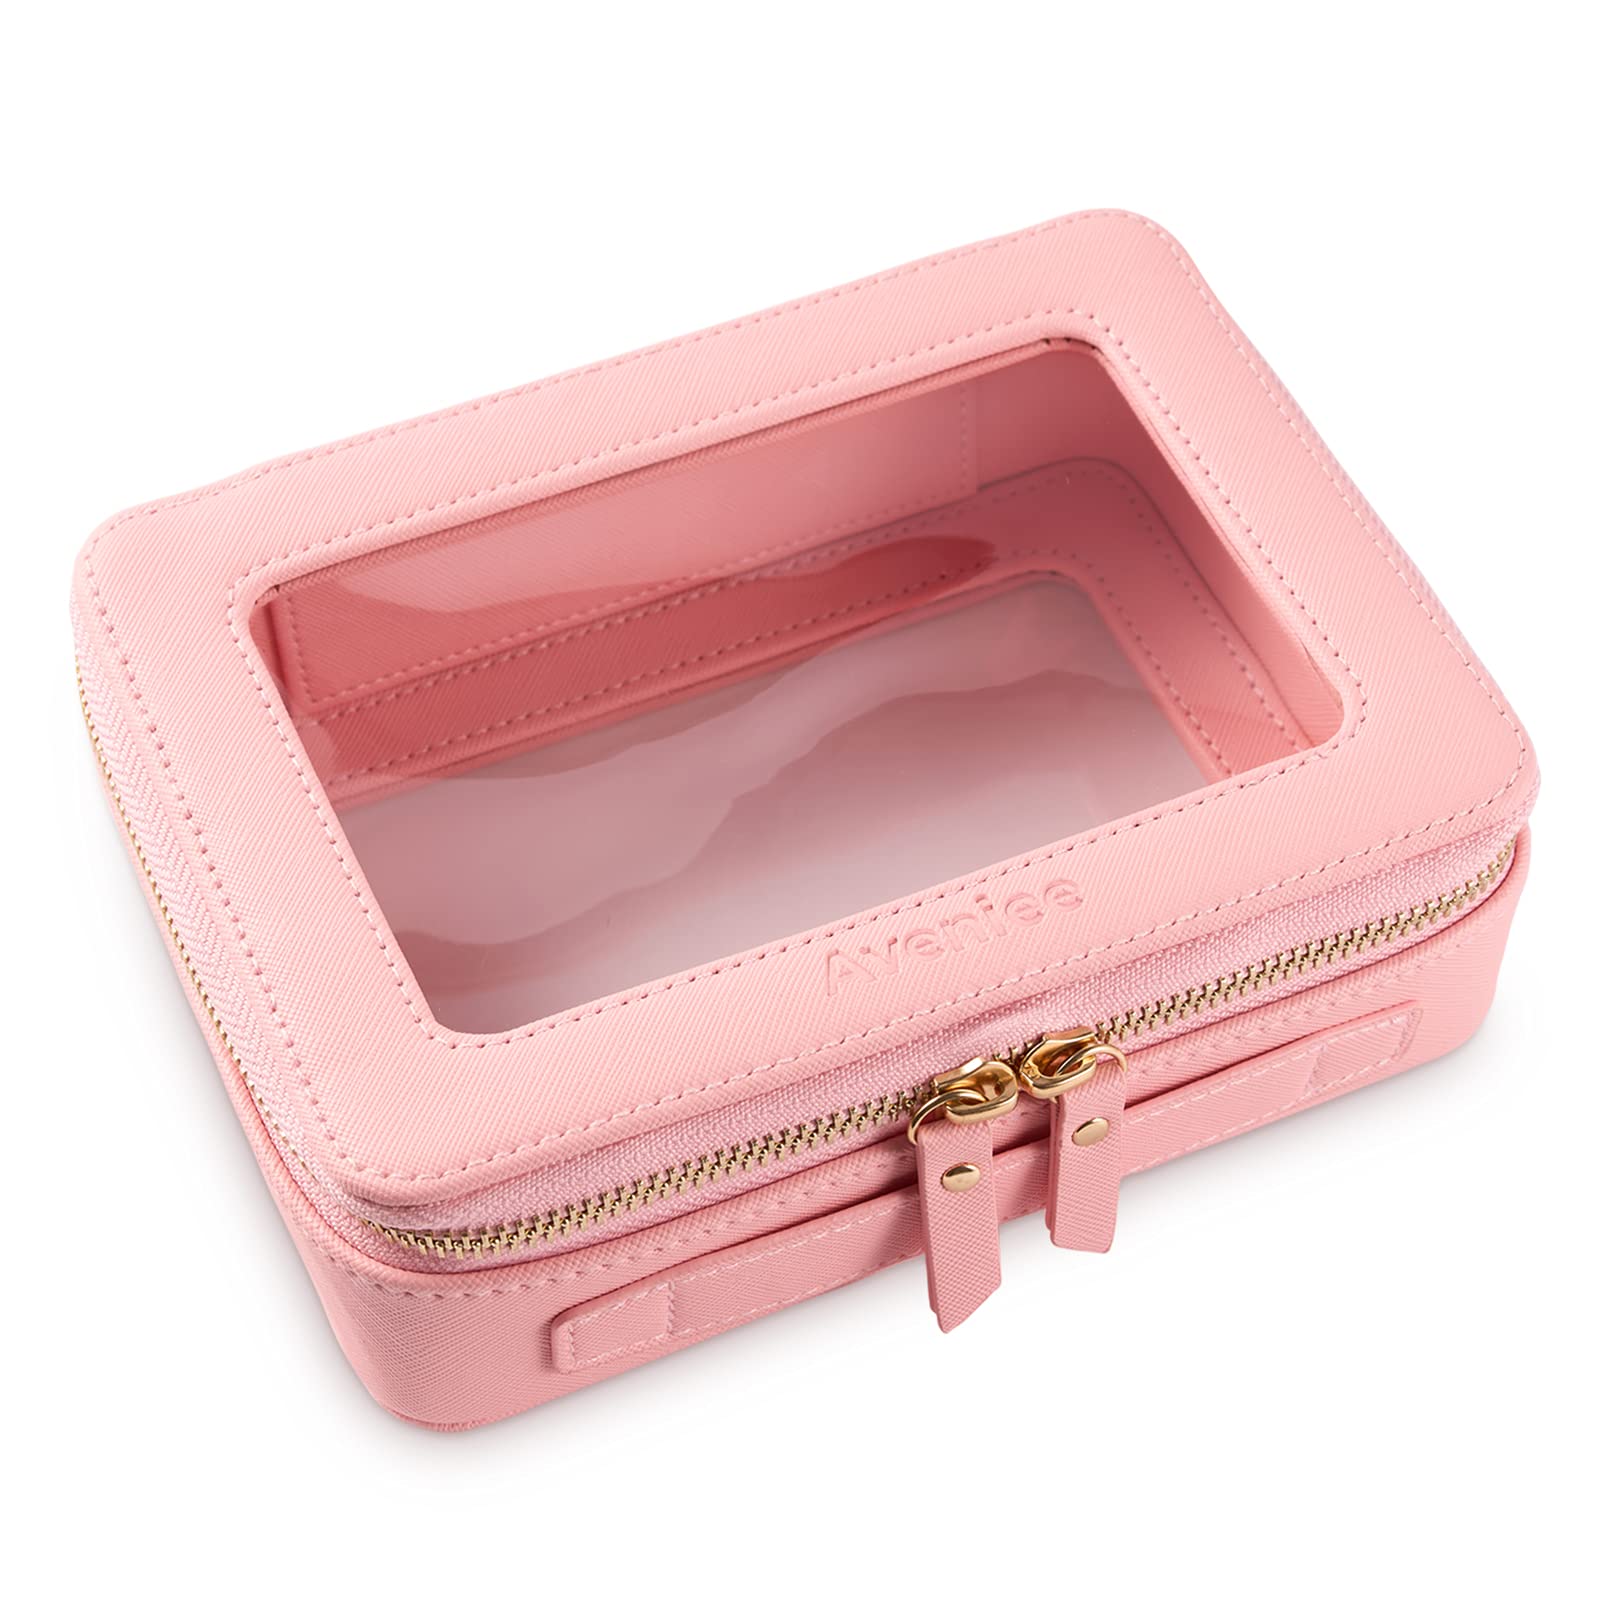 Details about   Mesh Travel Bag Organizer Women Transparent Packing Cube Zipper Cute Makeup Case 